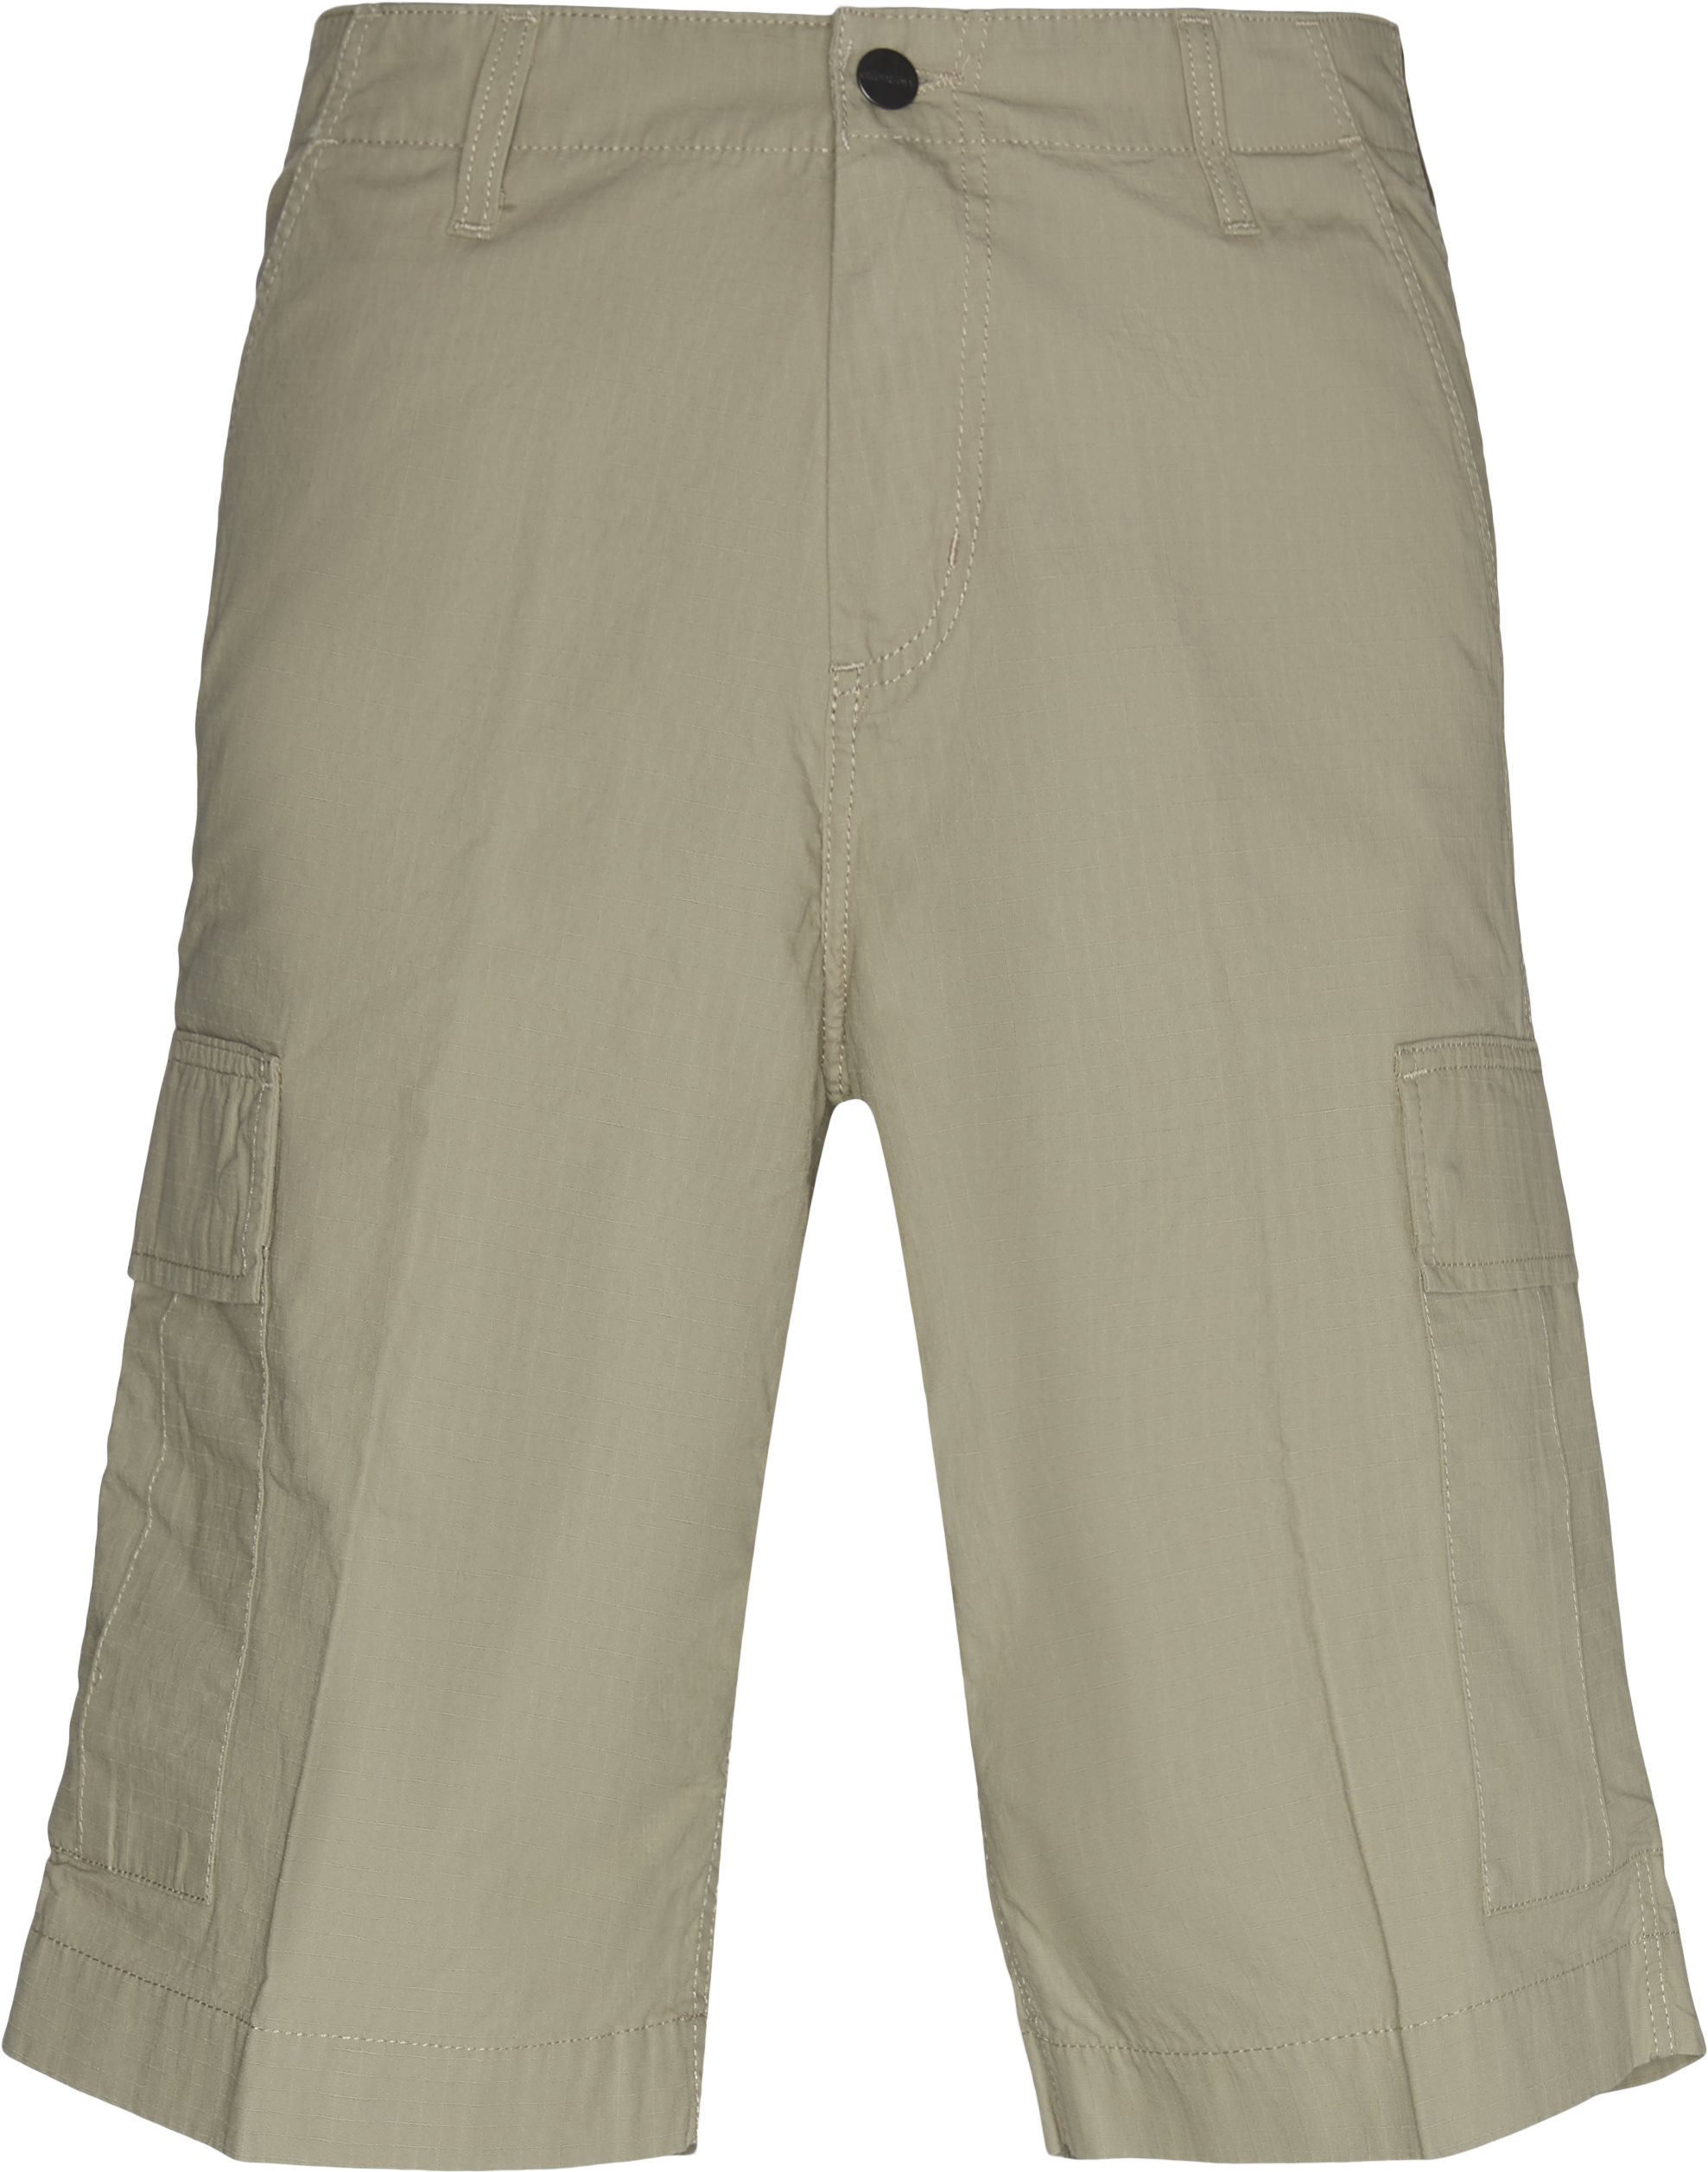 Regular Cargo Shorts - Shorts - Regular fit - Sand